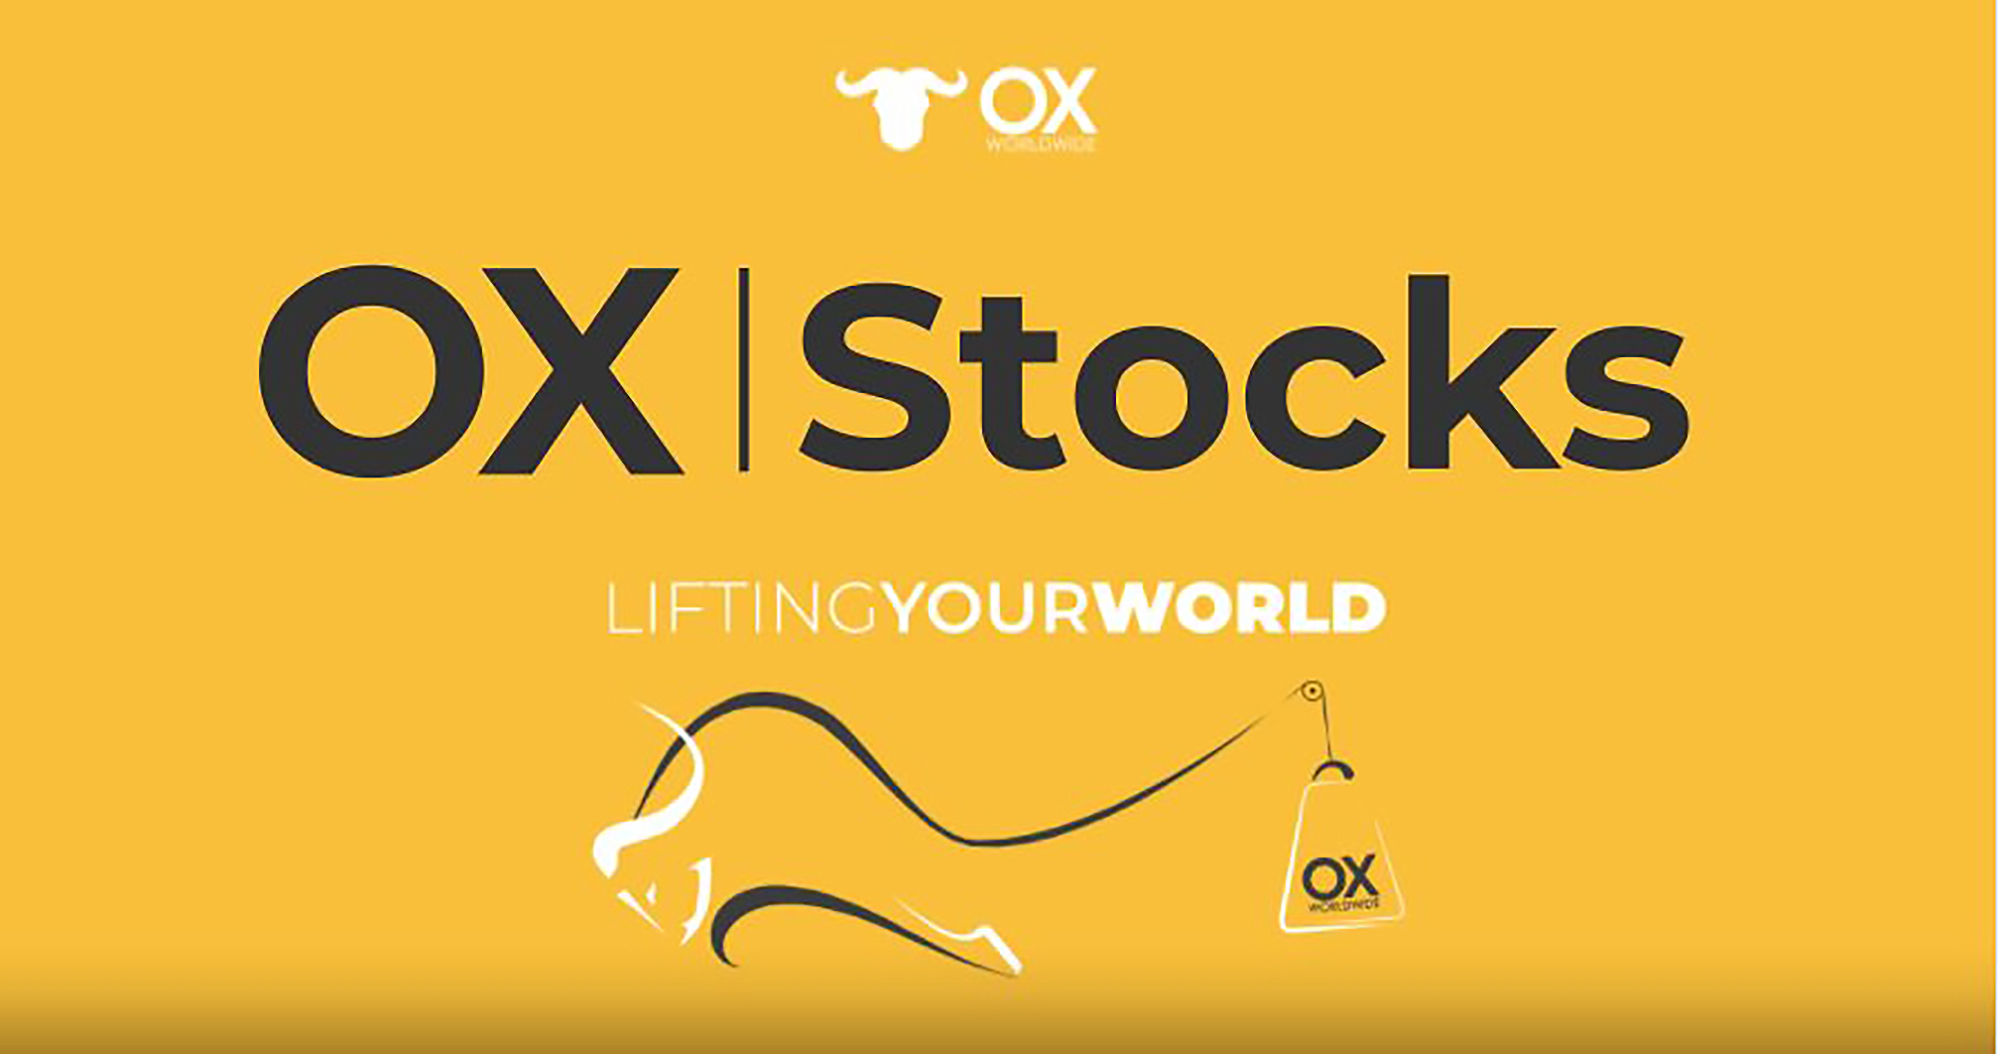 Ox Worldwide Stocks